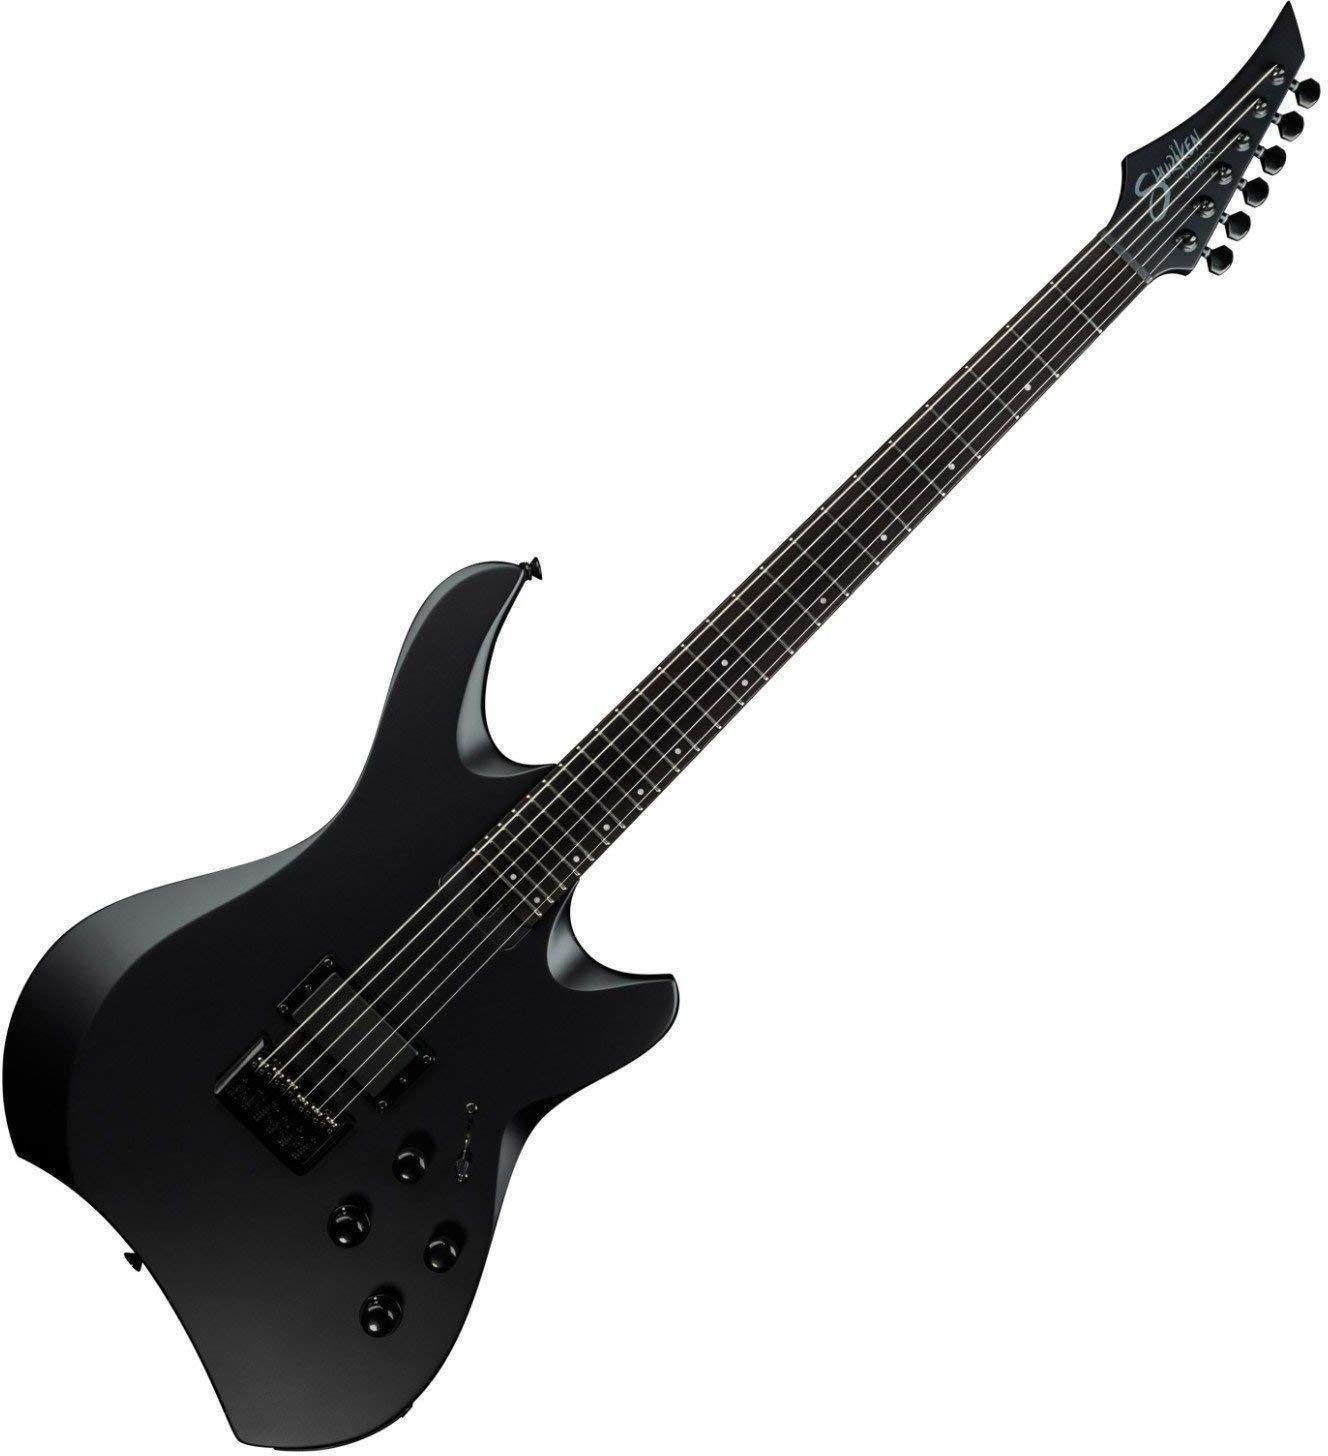 E-Gitarre Line6 Shuriken Variax SR270